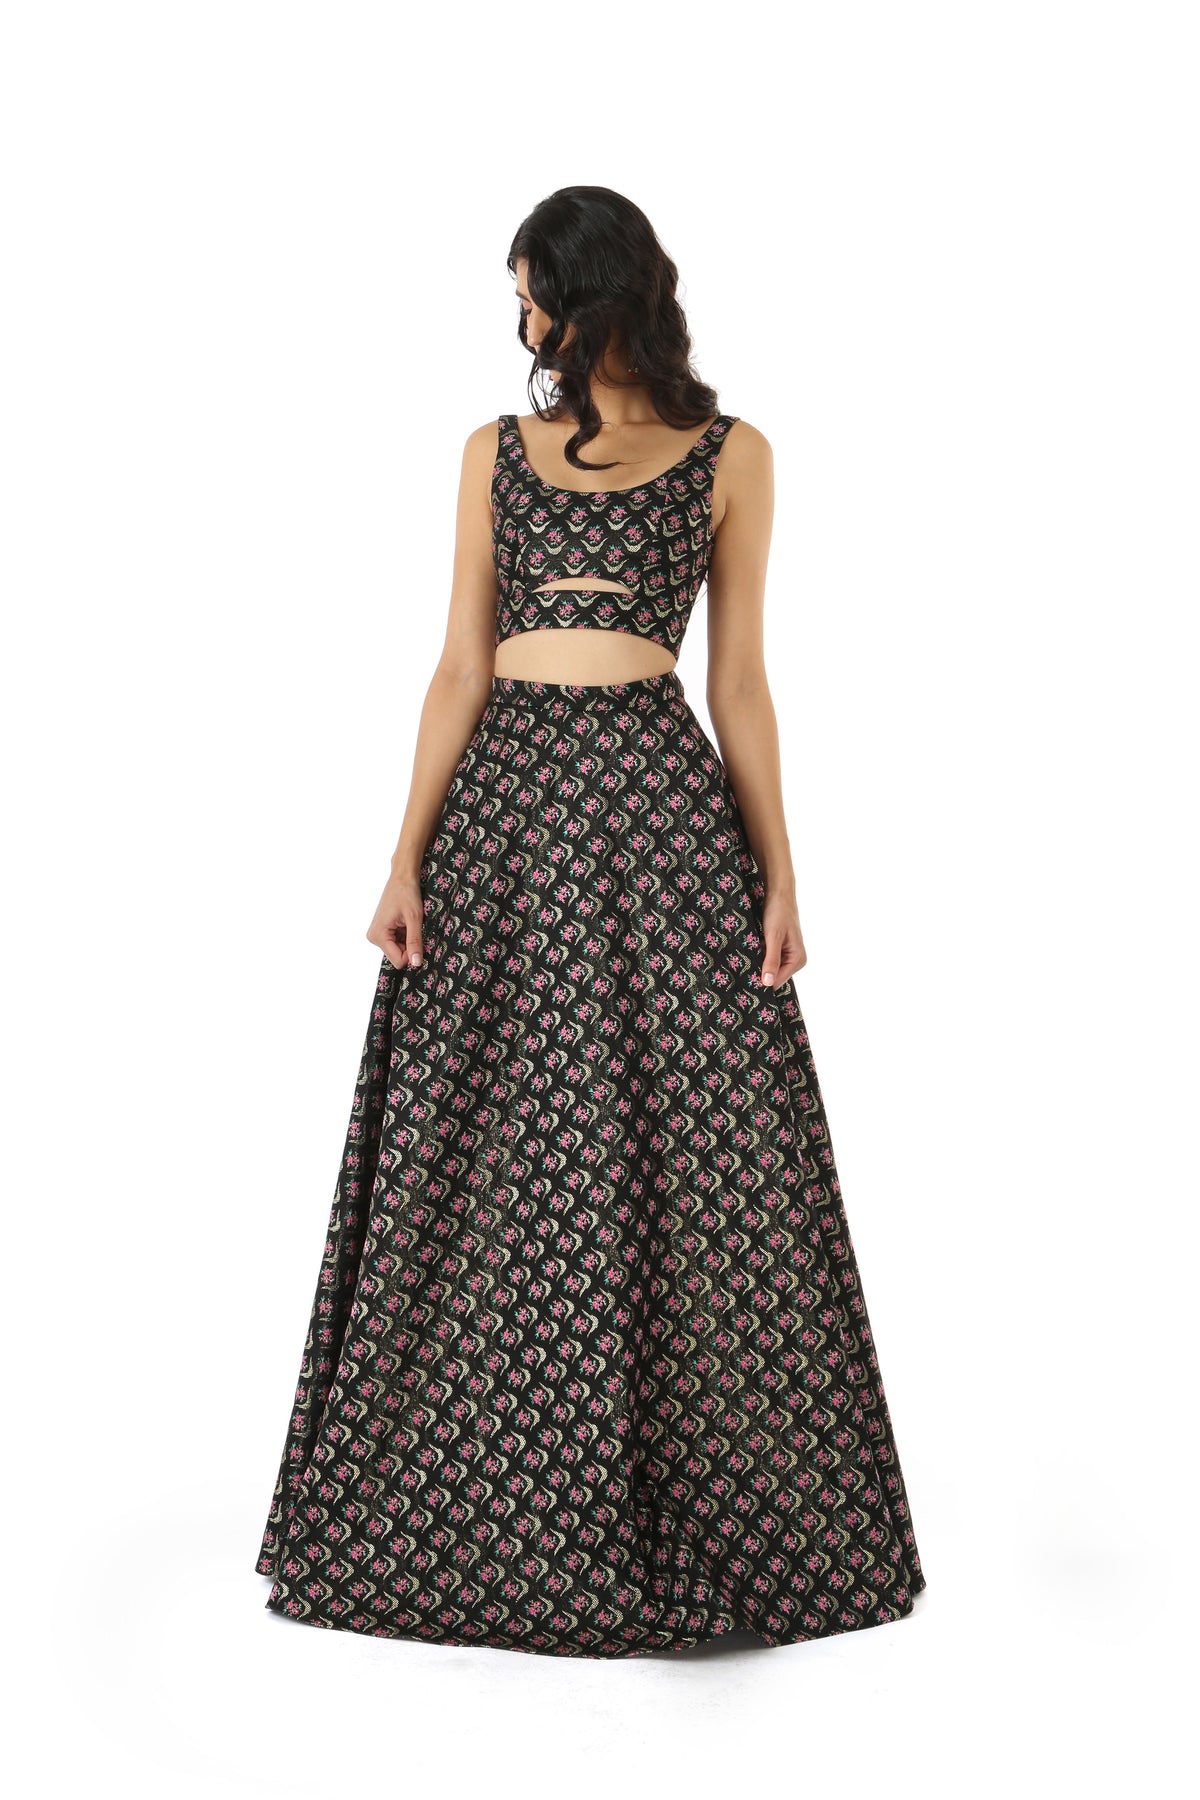 ANEELA Dark Full Length Lehenga Skirt with Gold and Pink Flowers - Front View | HARLEEN KAUR